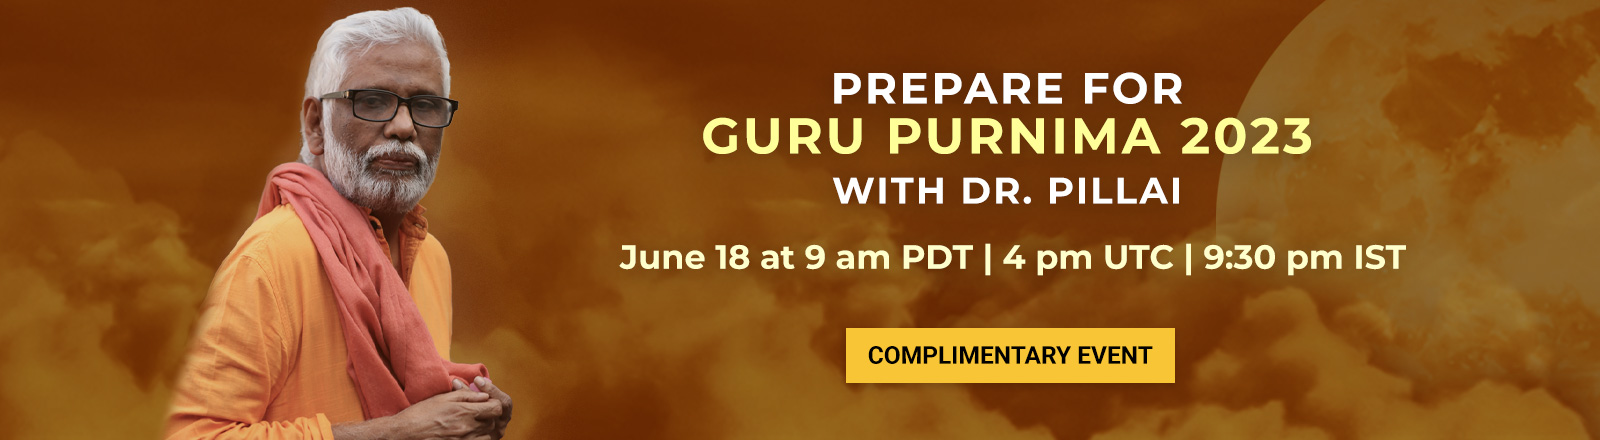 Prepare for Guru Purnima Event